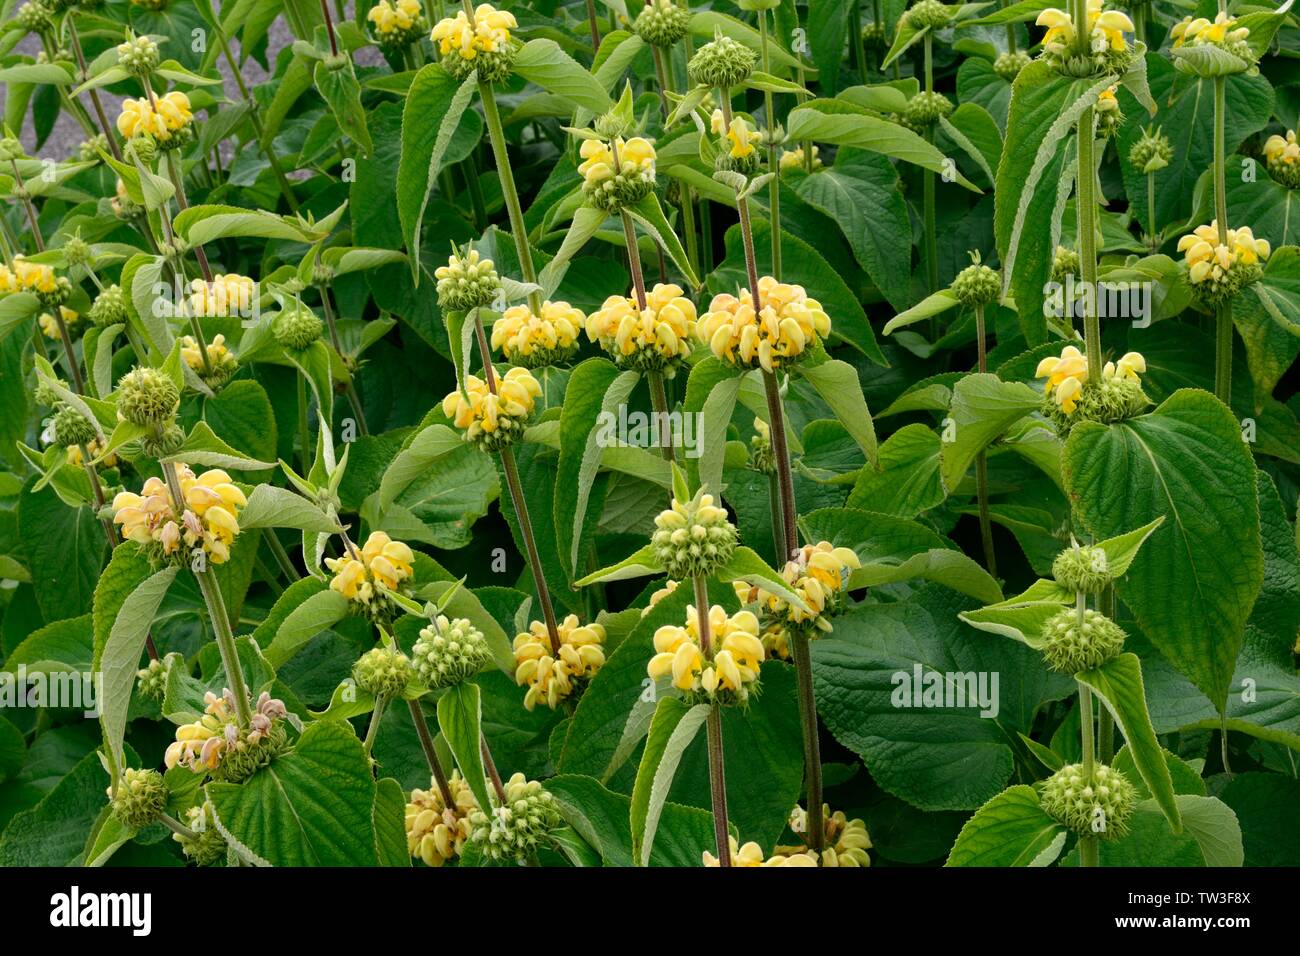 Phlomis russeliana Turkish sage flowering plant in the mint family Stock Photo